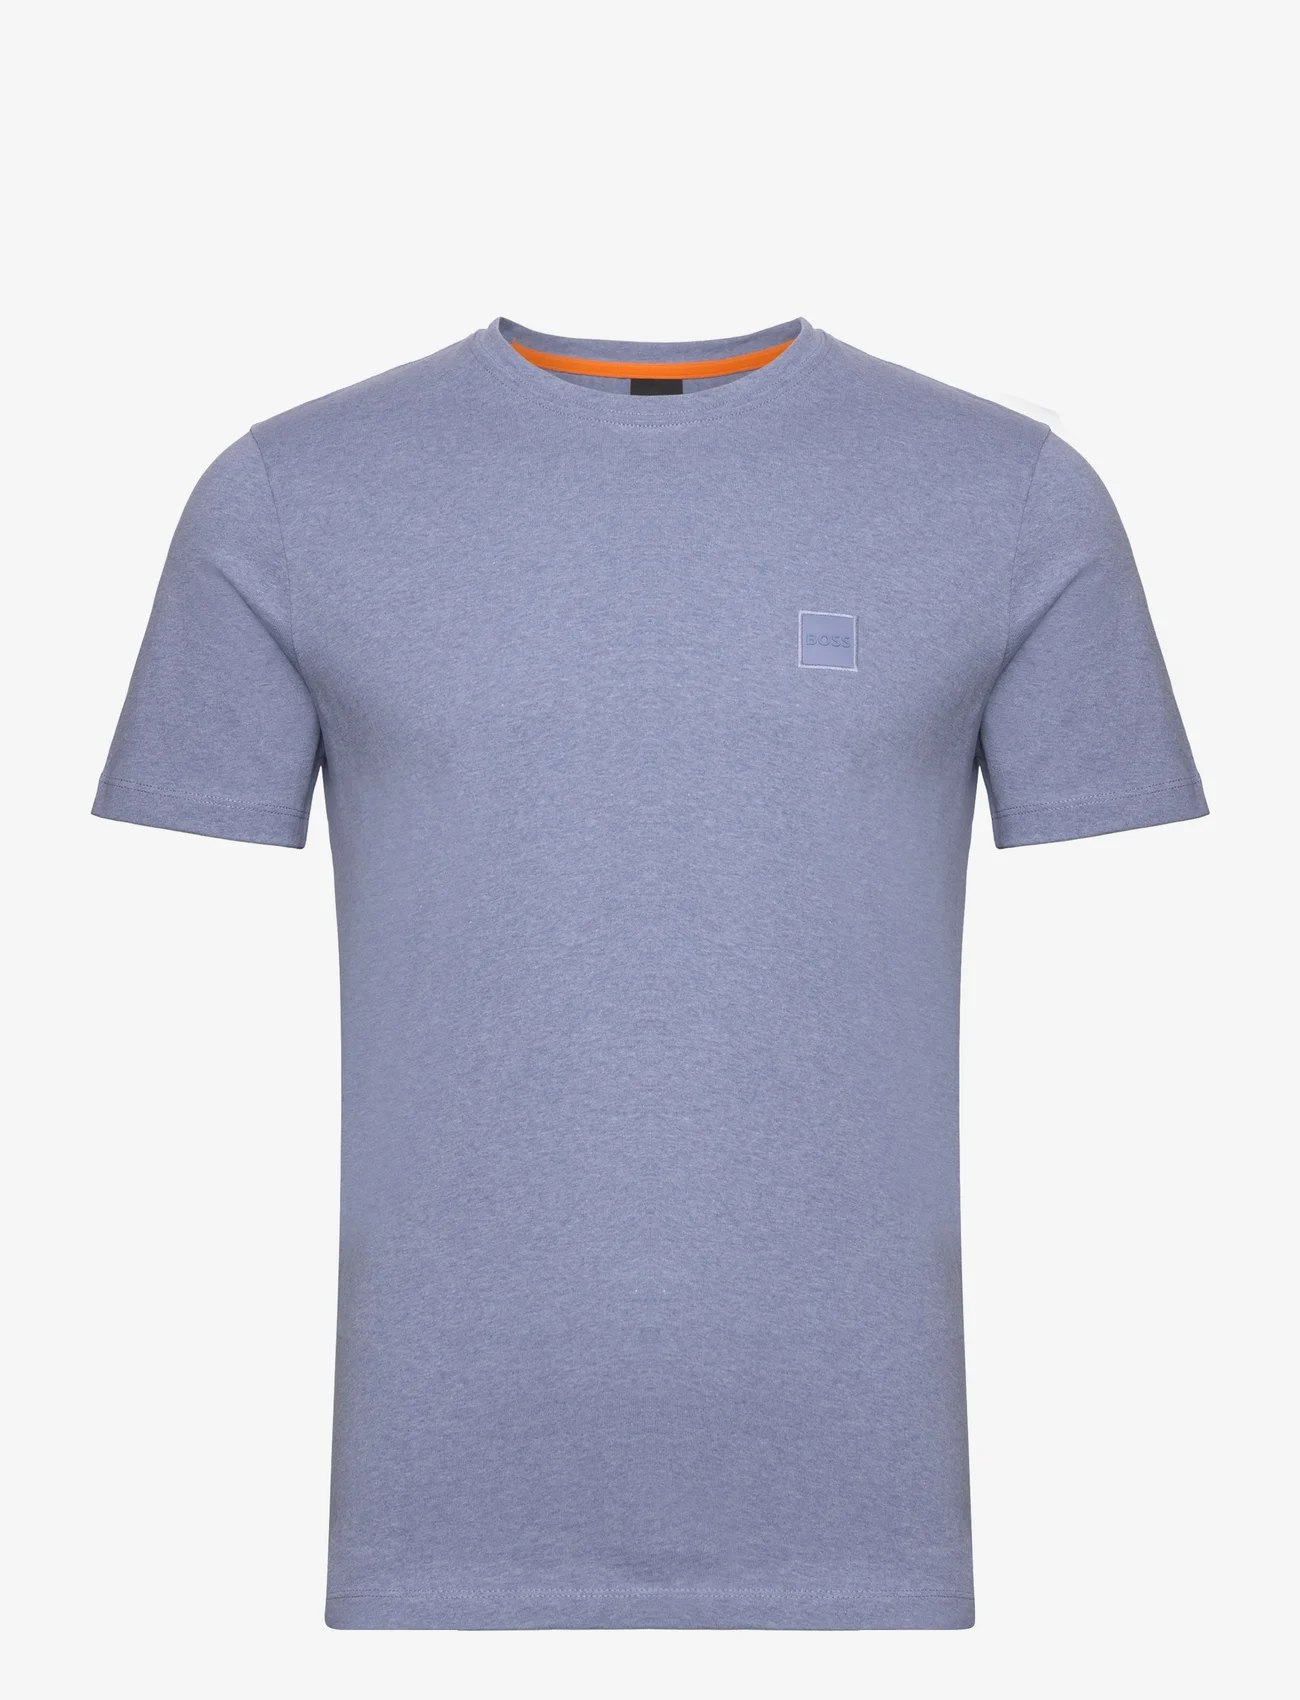 BOSS - Tales - basic t-shirts - open blue - 0